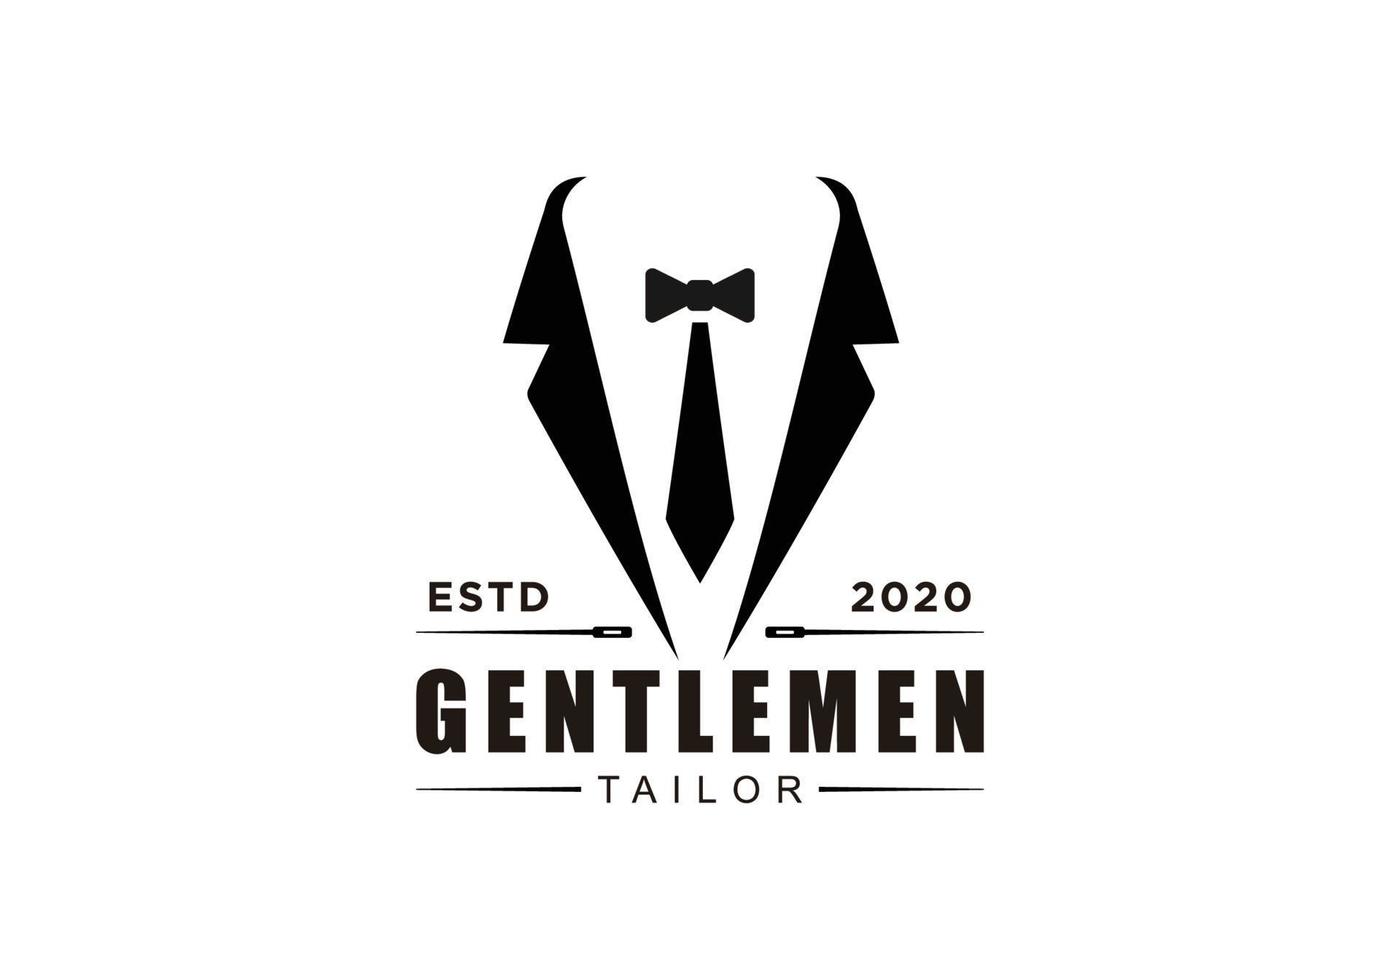 gravata de fita terno smoking cavalheiro moda alfaiate roupas vintage design de logotipo clássico vetor